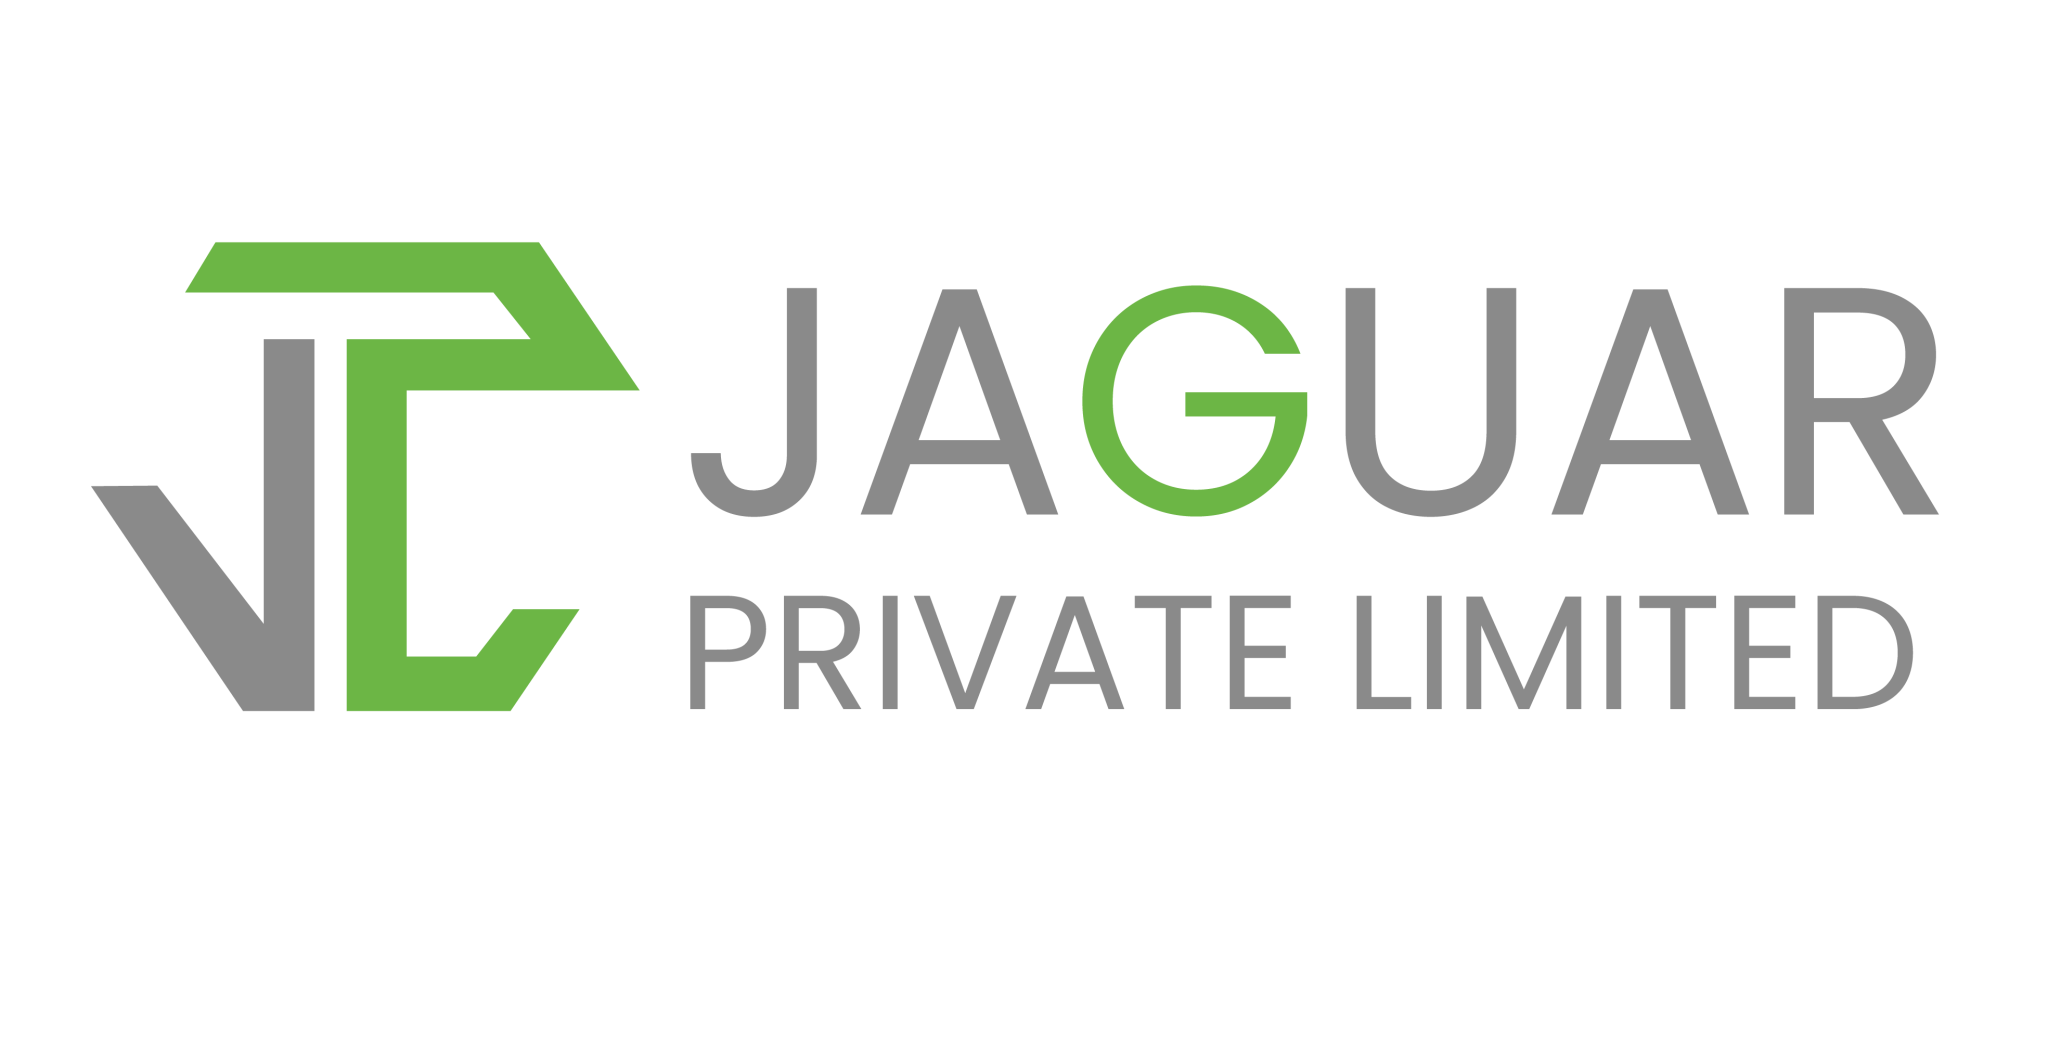 jaguar private limited logo